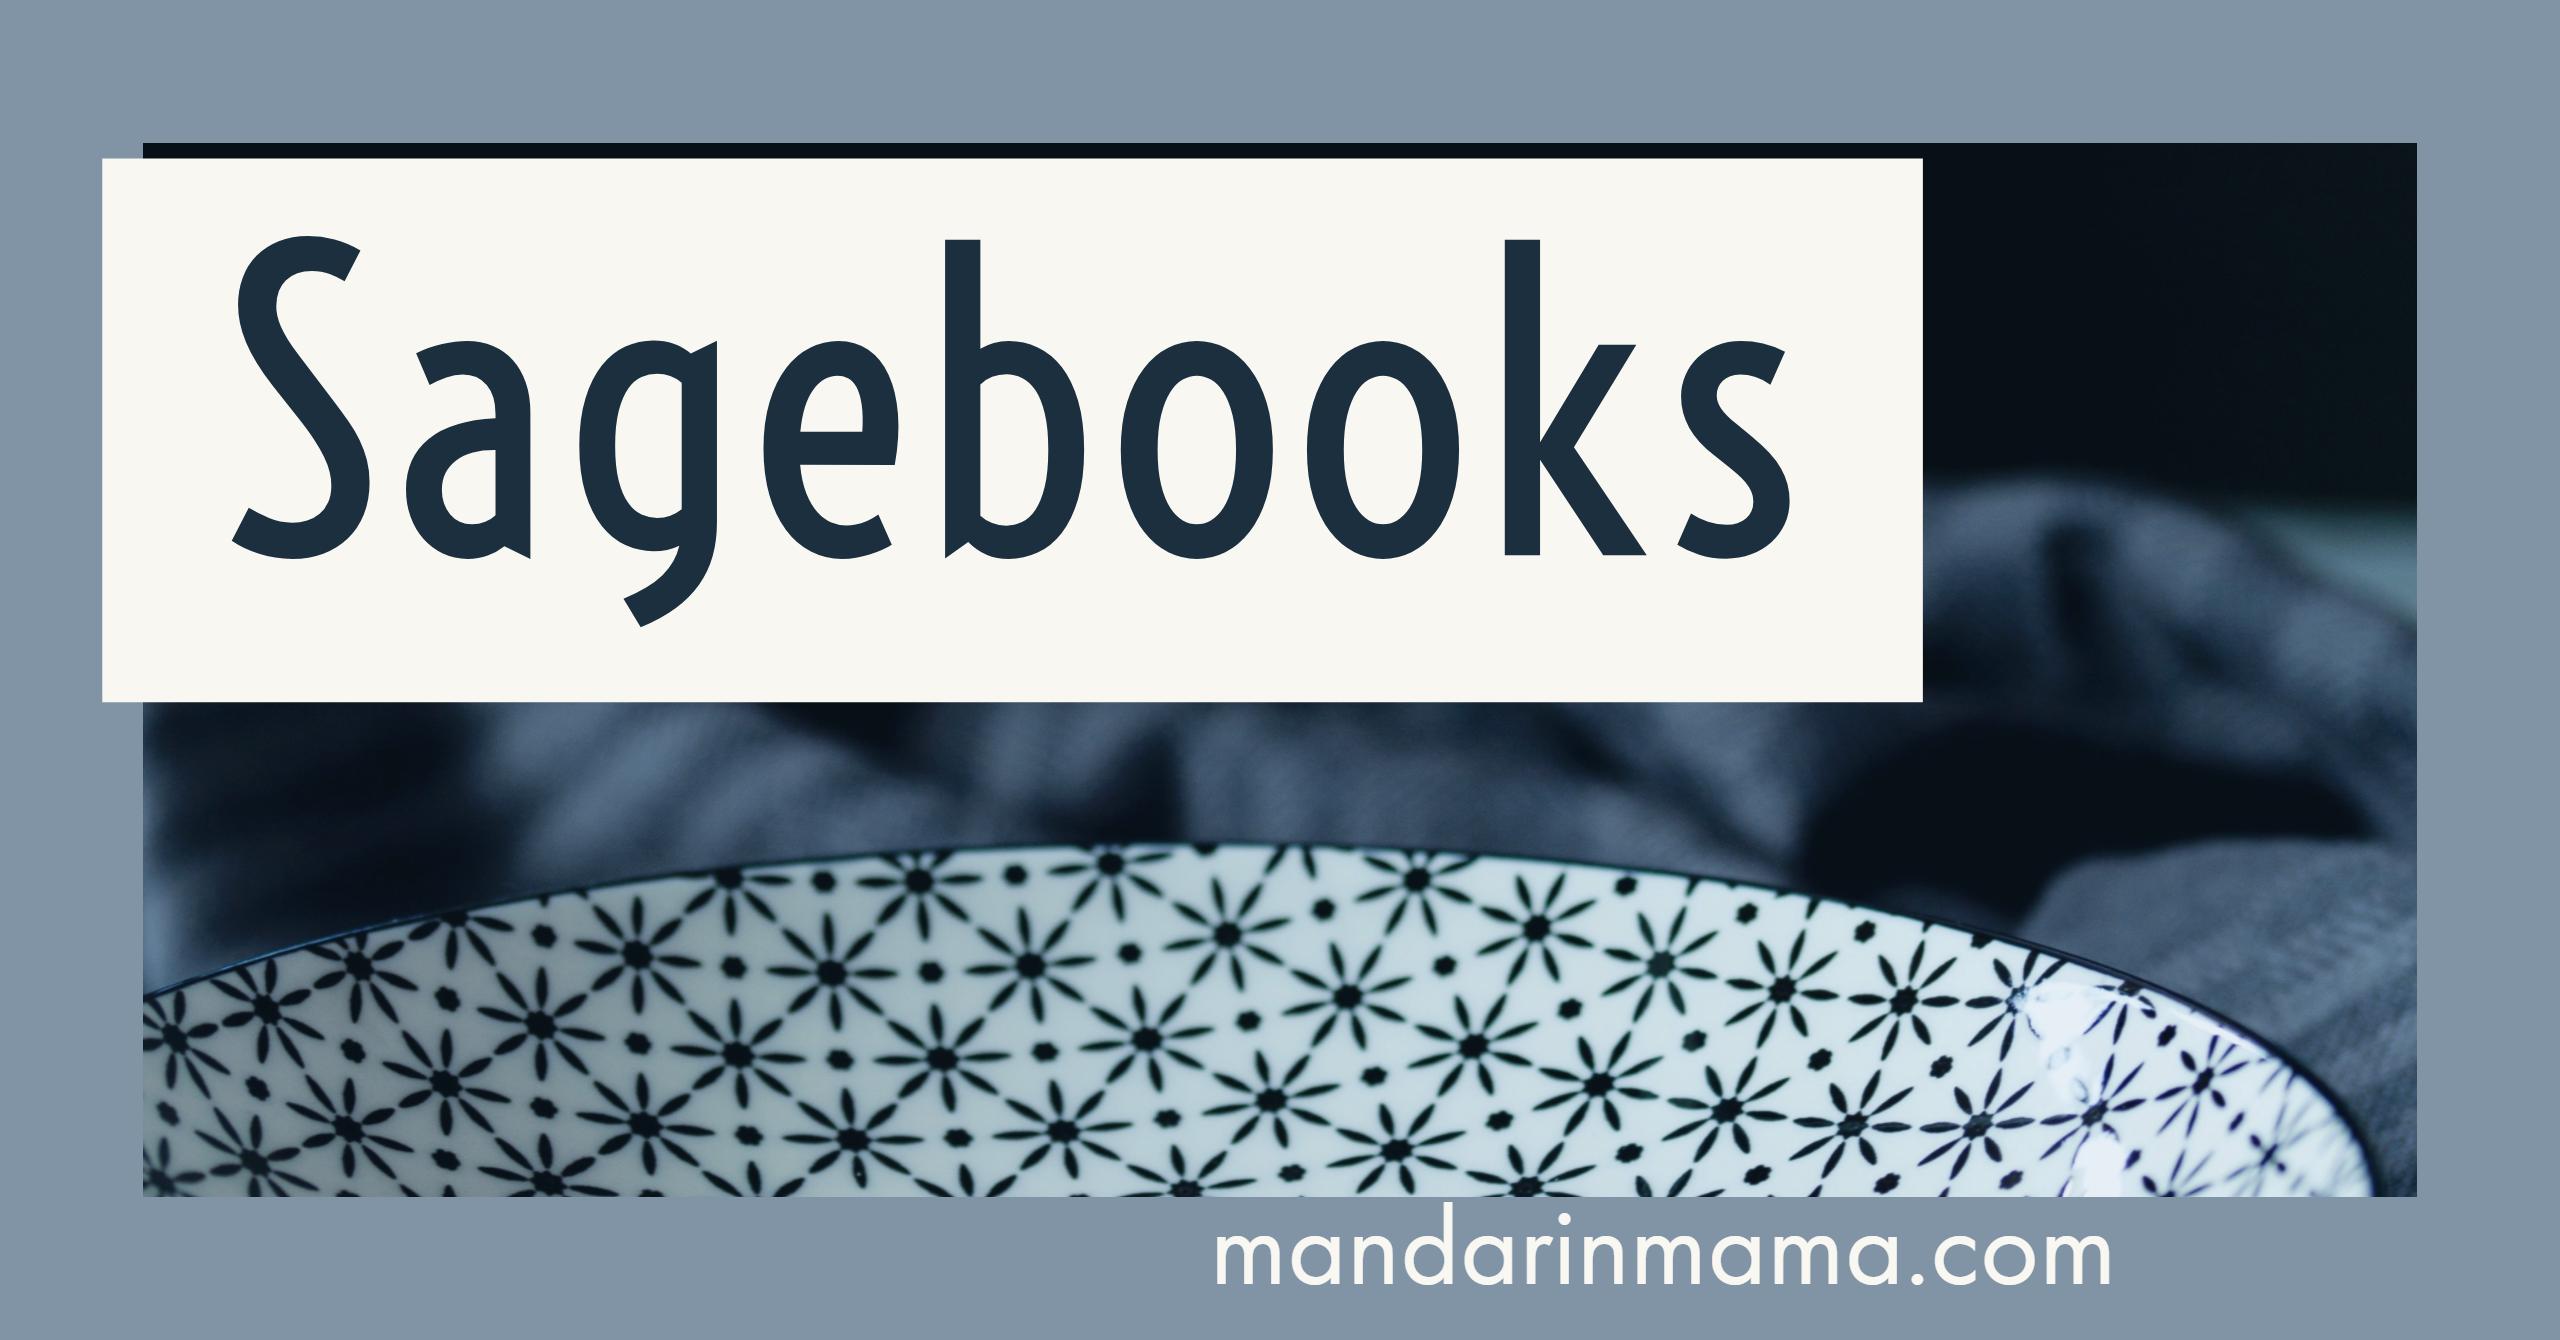 Sagebooks Review